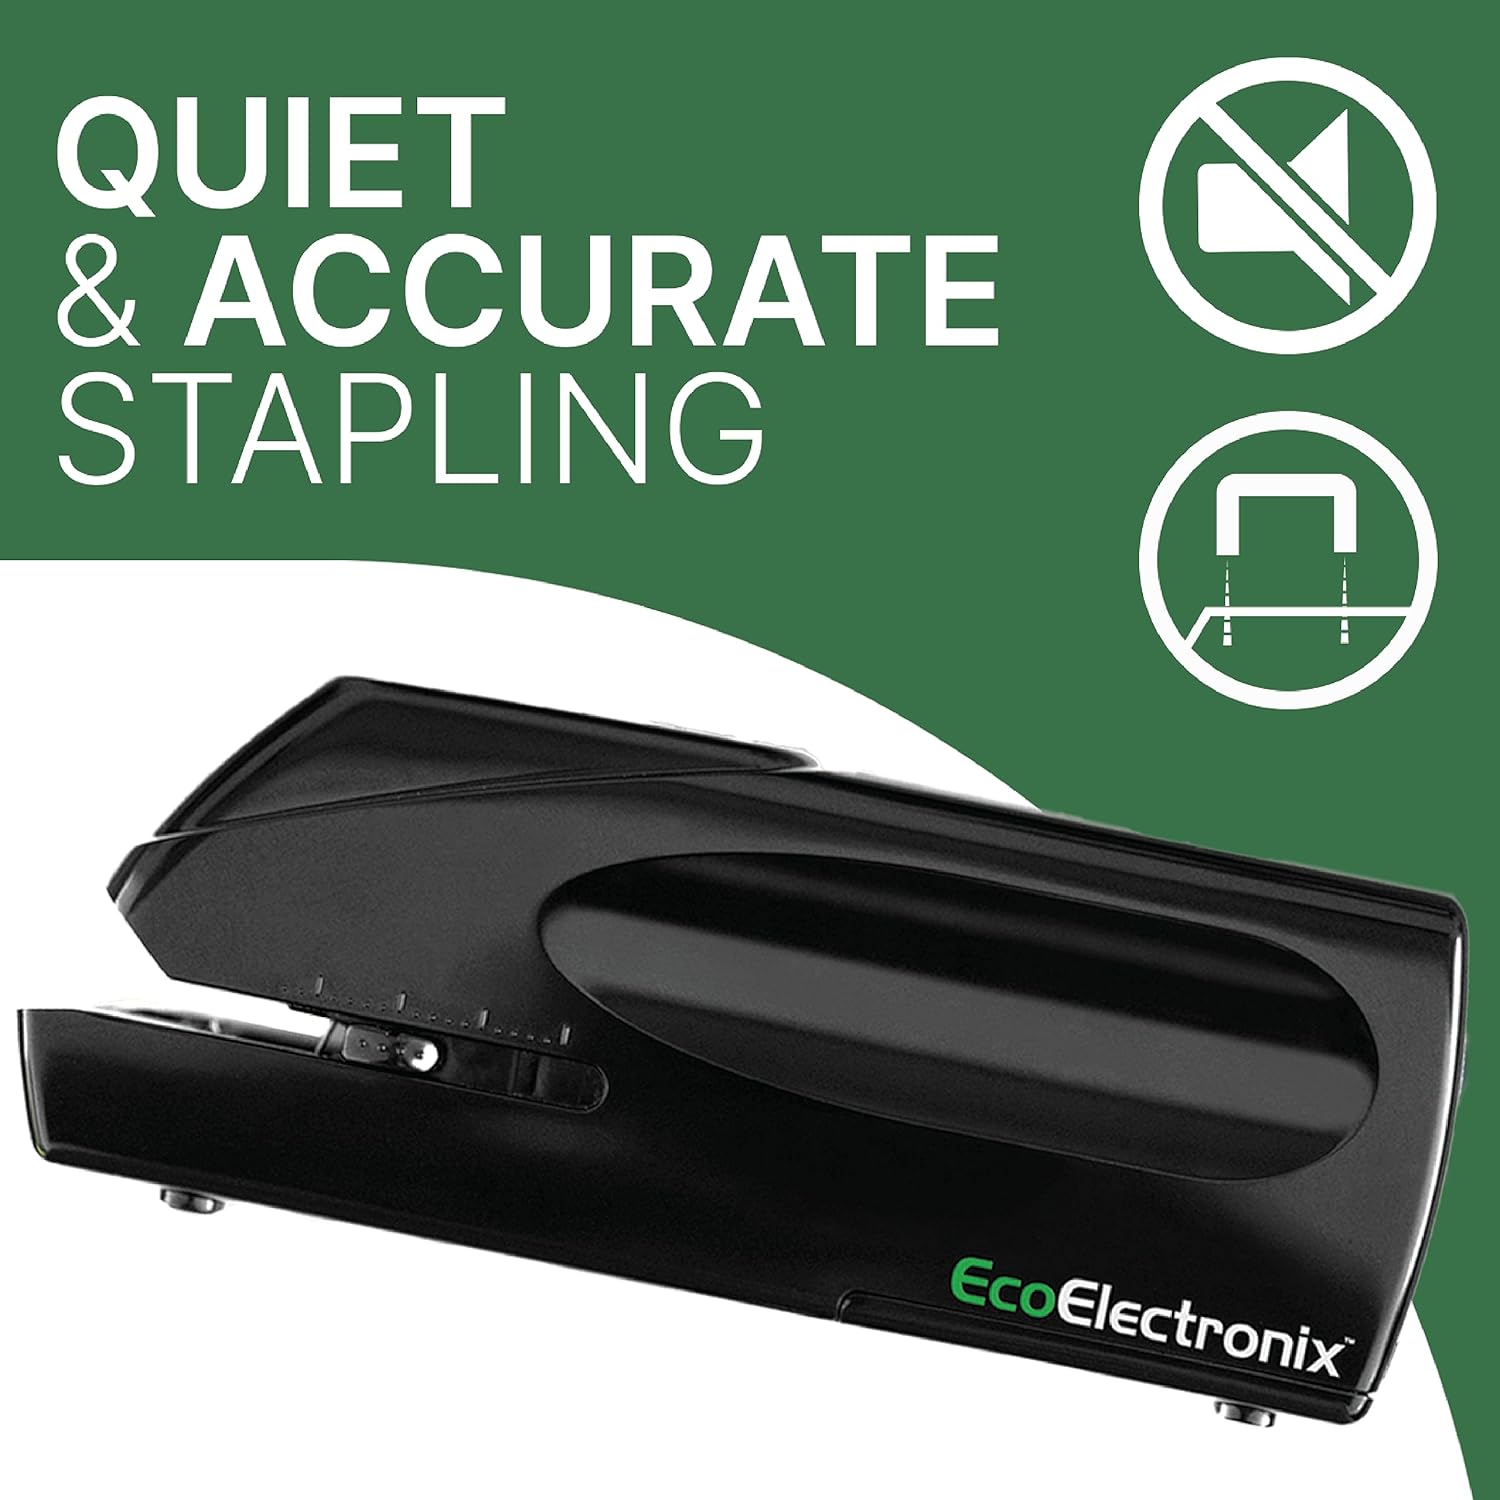 Eco Electronix StaplePro black quiet & accurate stapling